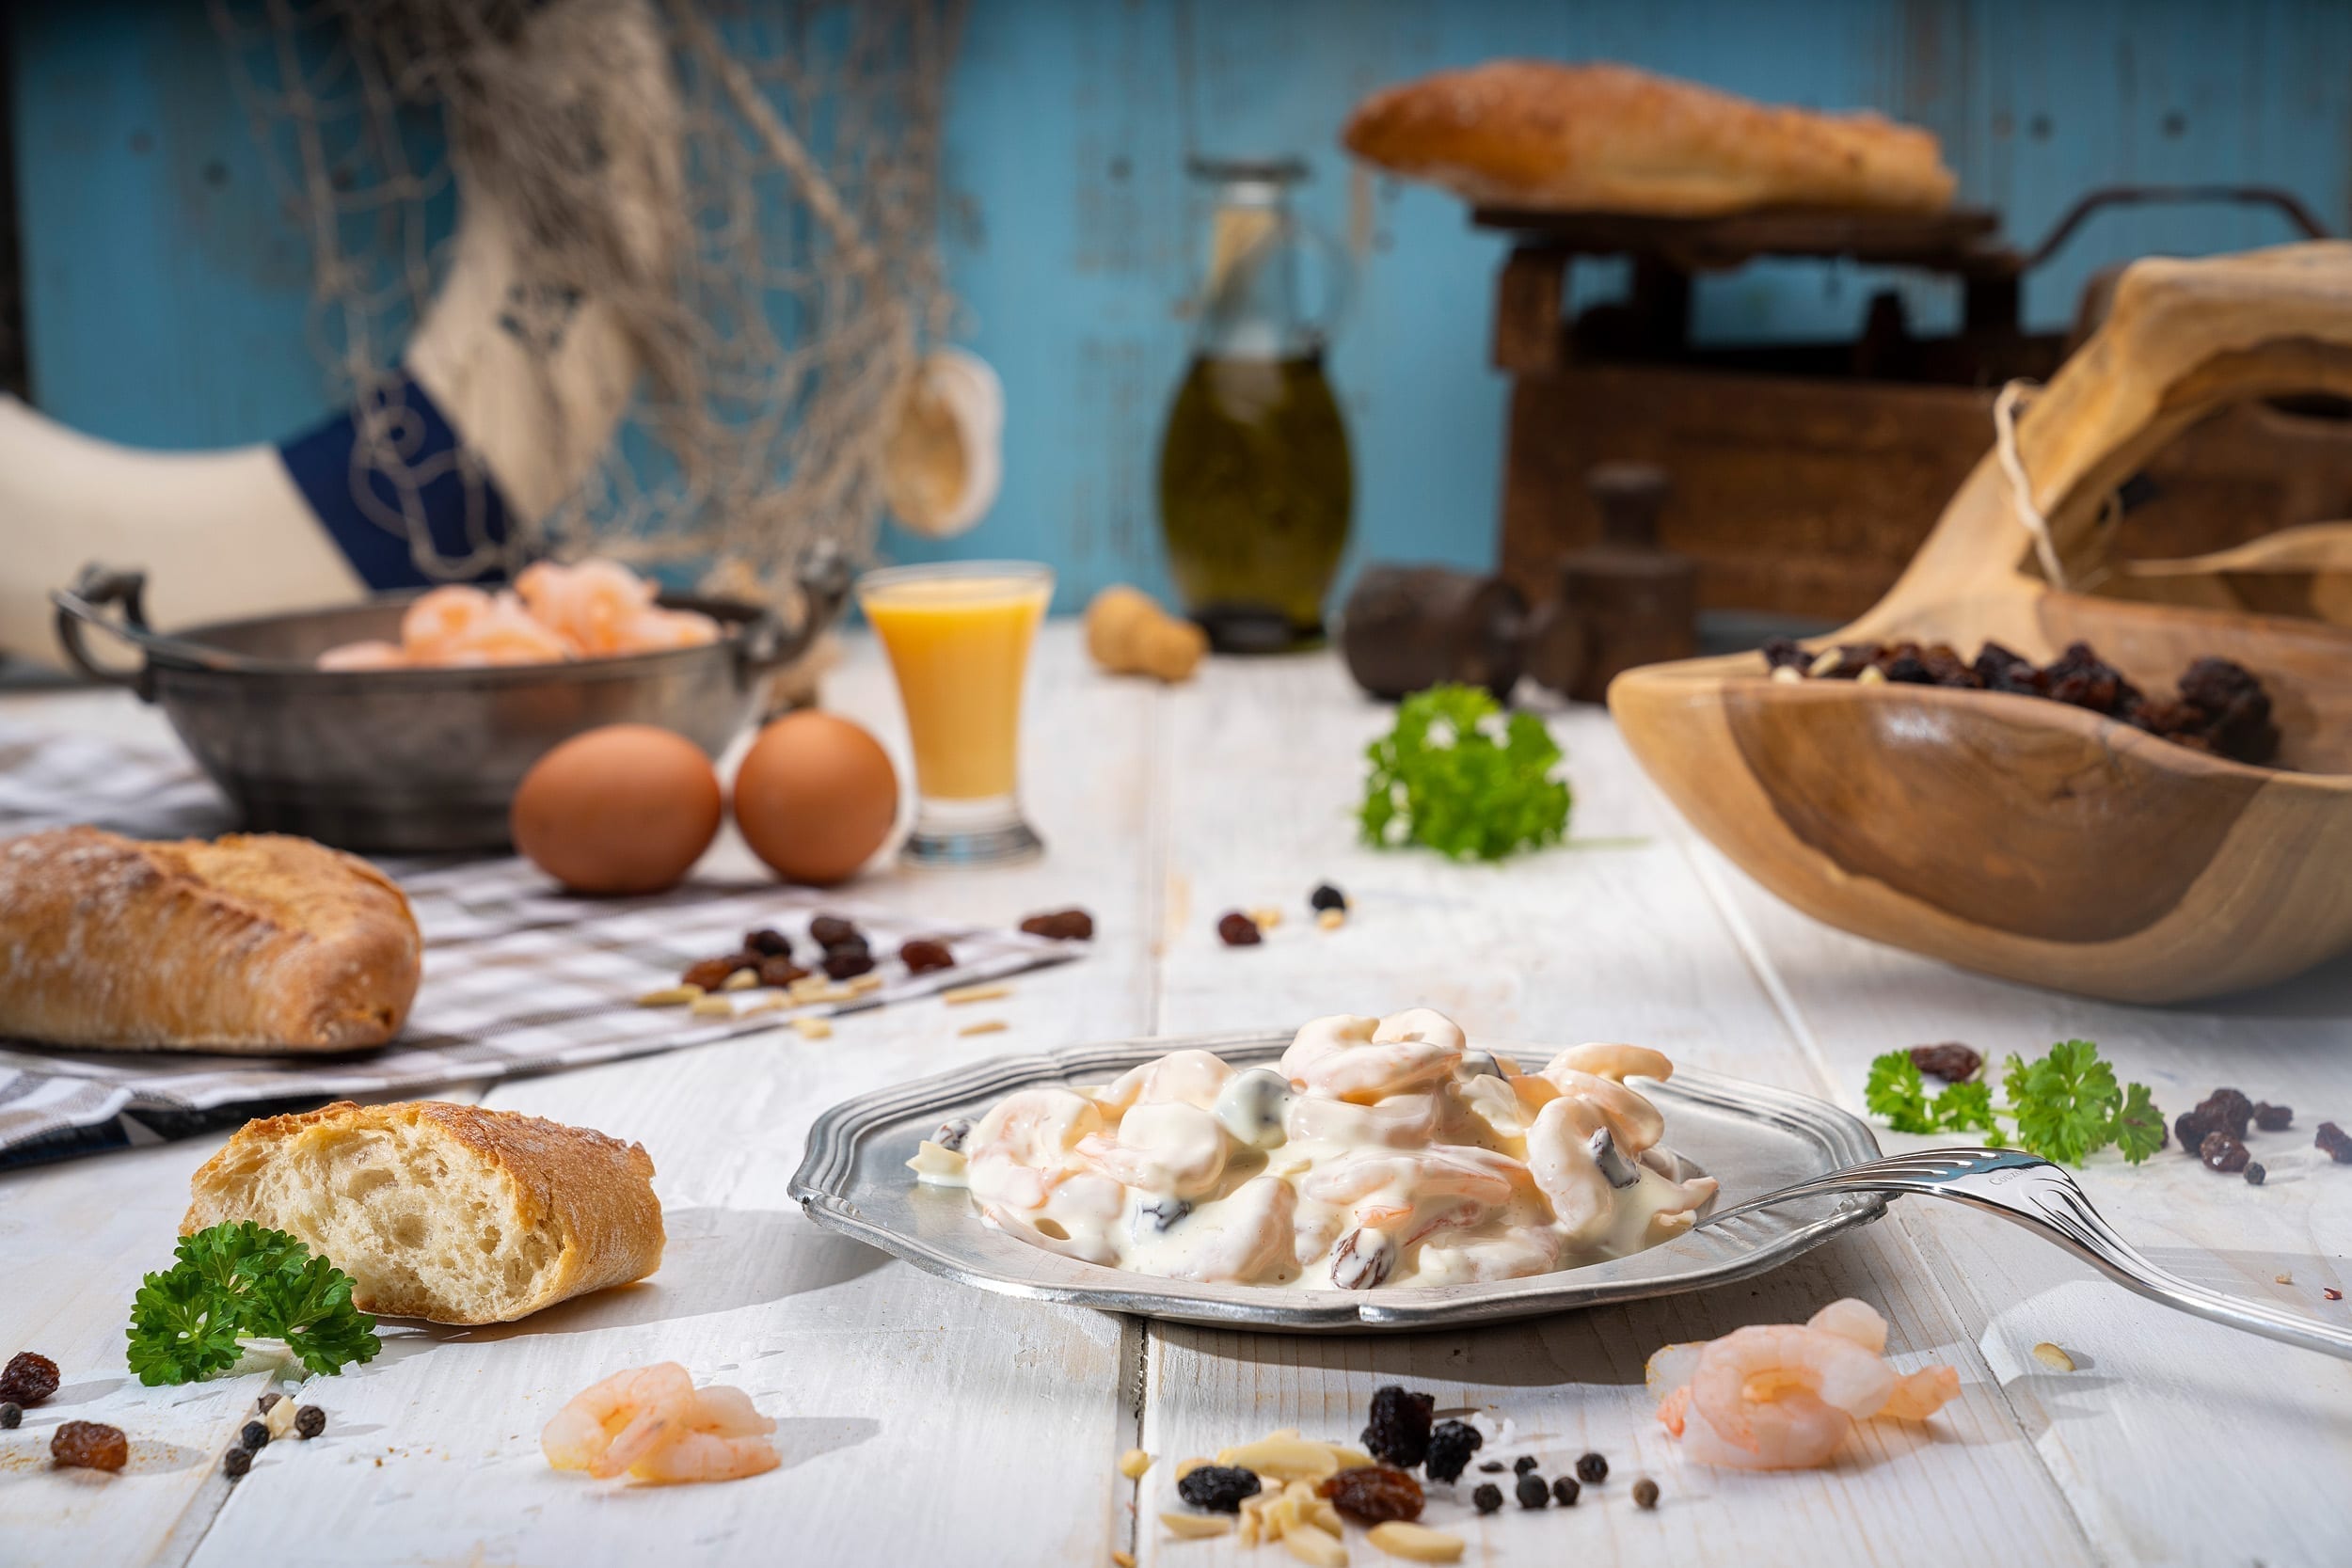 Foodfotografie - Garnelensalate - Fischprodukte lecker fotografieren